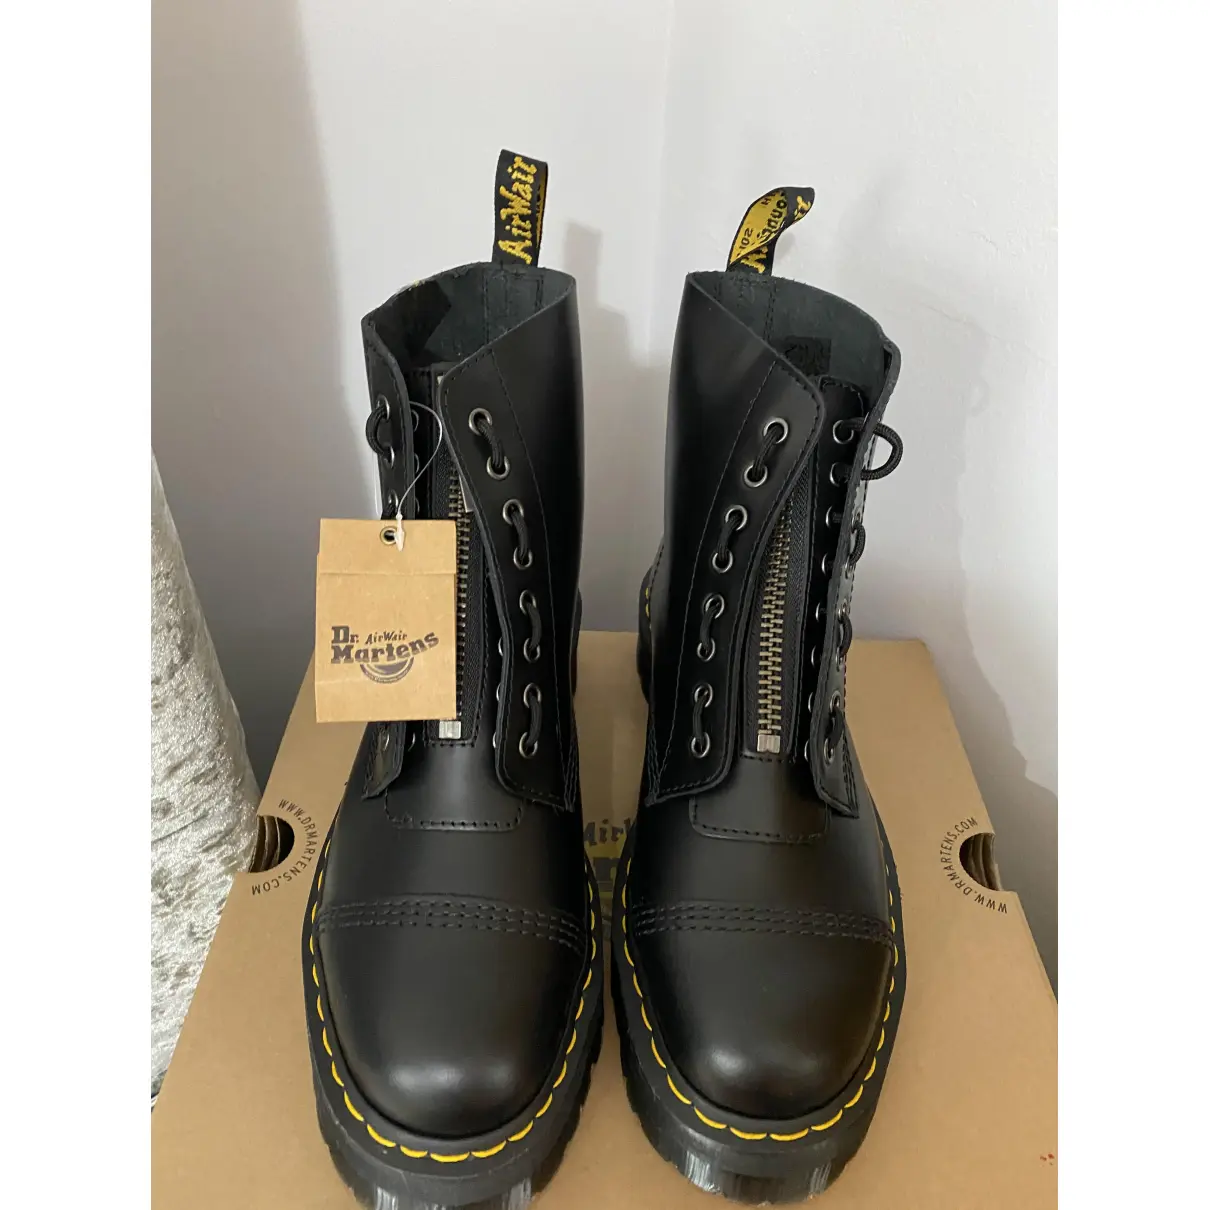 Buy Dr. Martens 1460 Pascal (8 eye) leather biker boots online